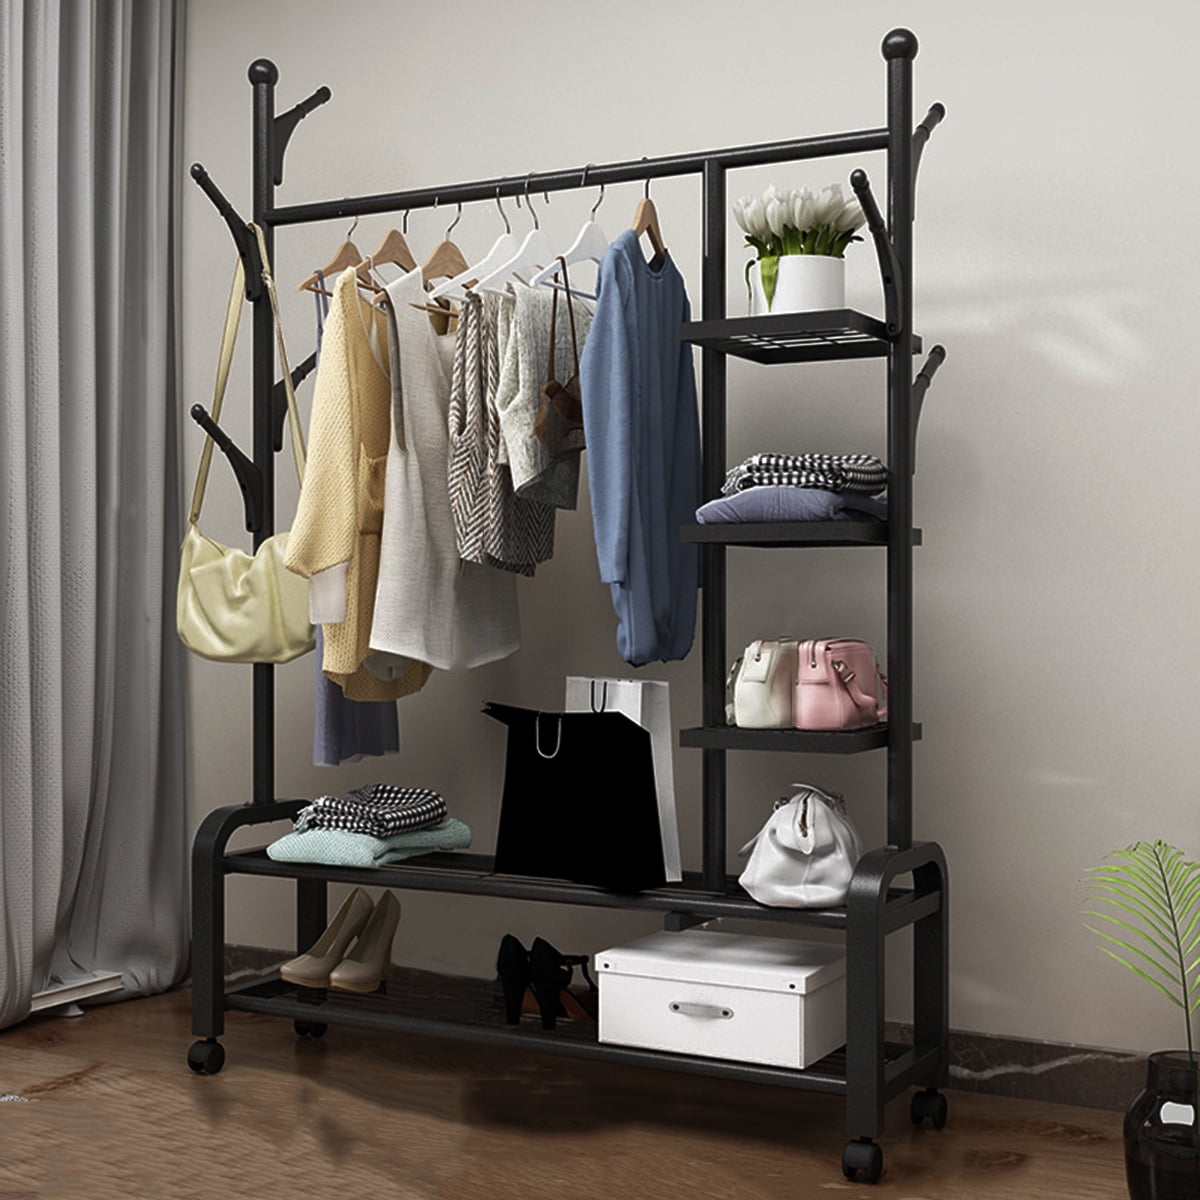 Clothing Garment Rack with Shelves, Metal Cloth Hanger Rack Stand